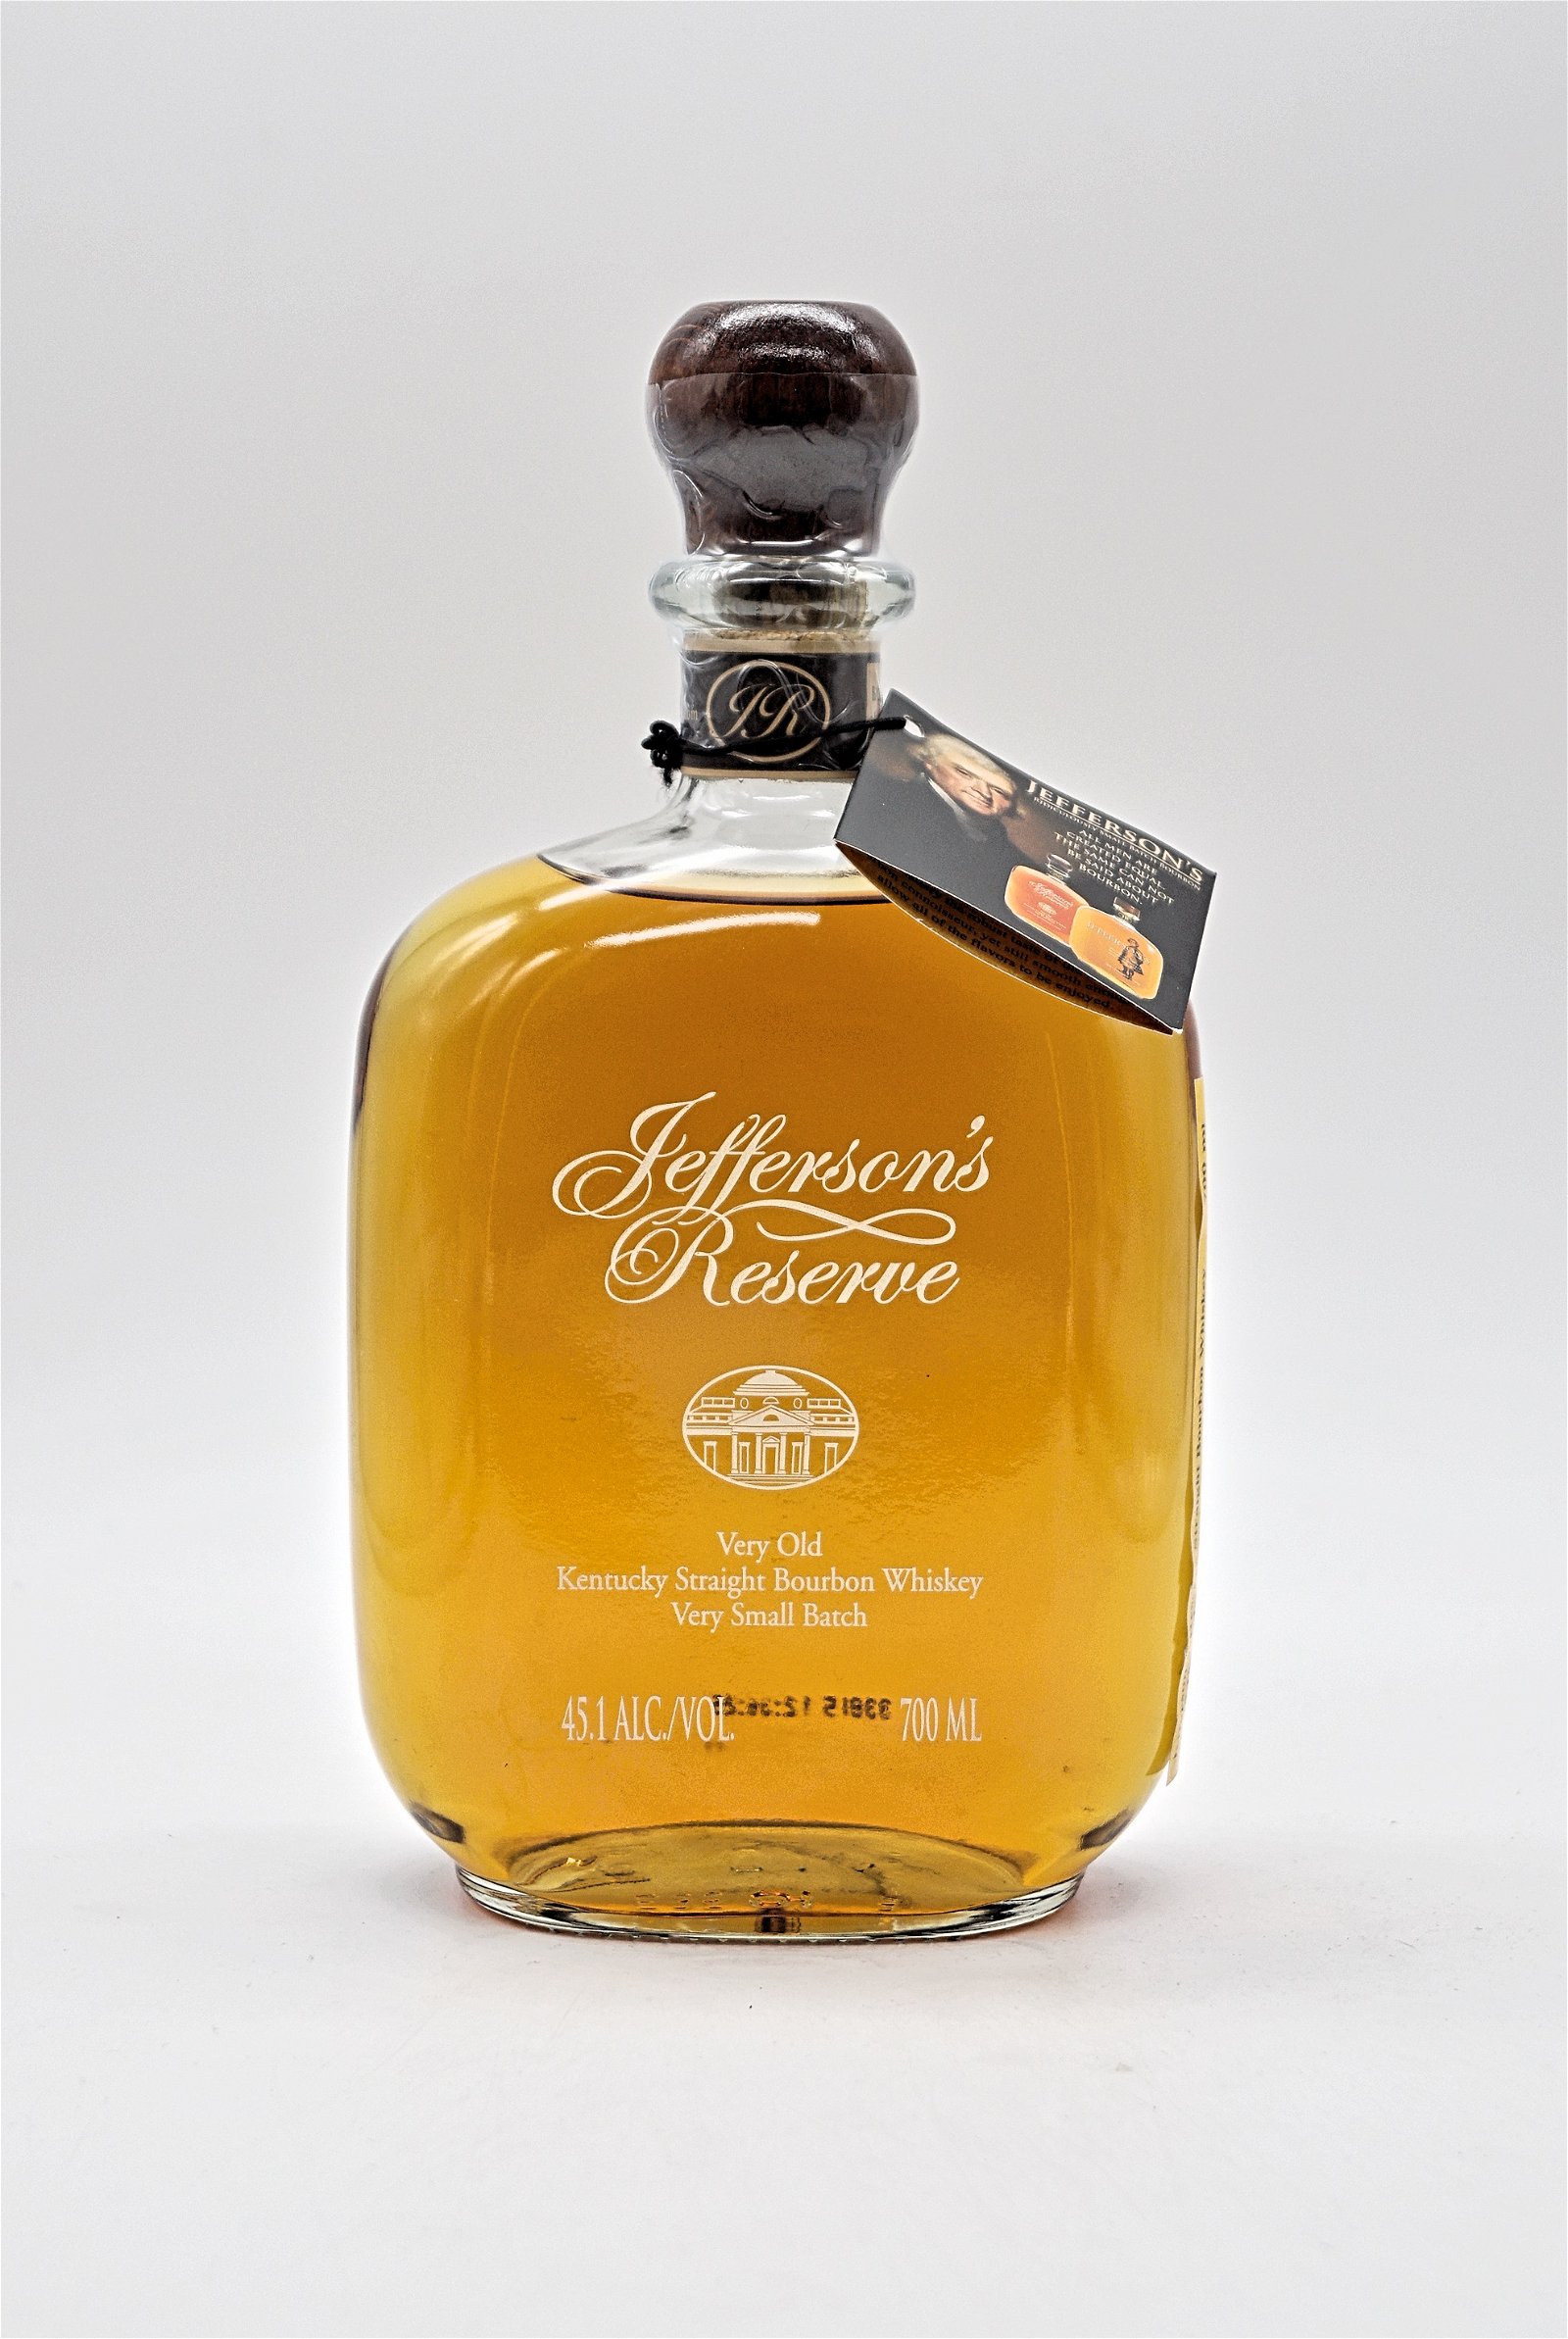 Jeffersons Reserve Very Old Kentucky Straight Bourbon Whiskey Very Small Batch